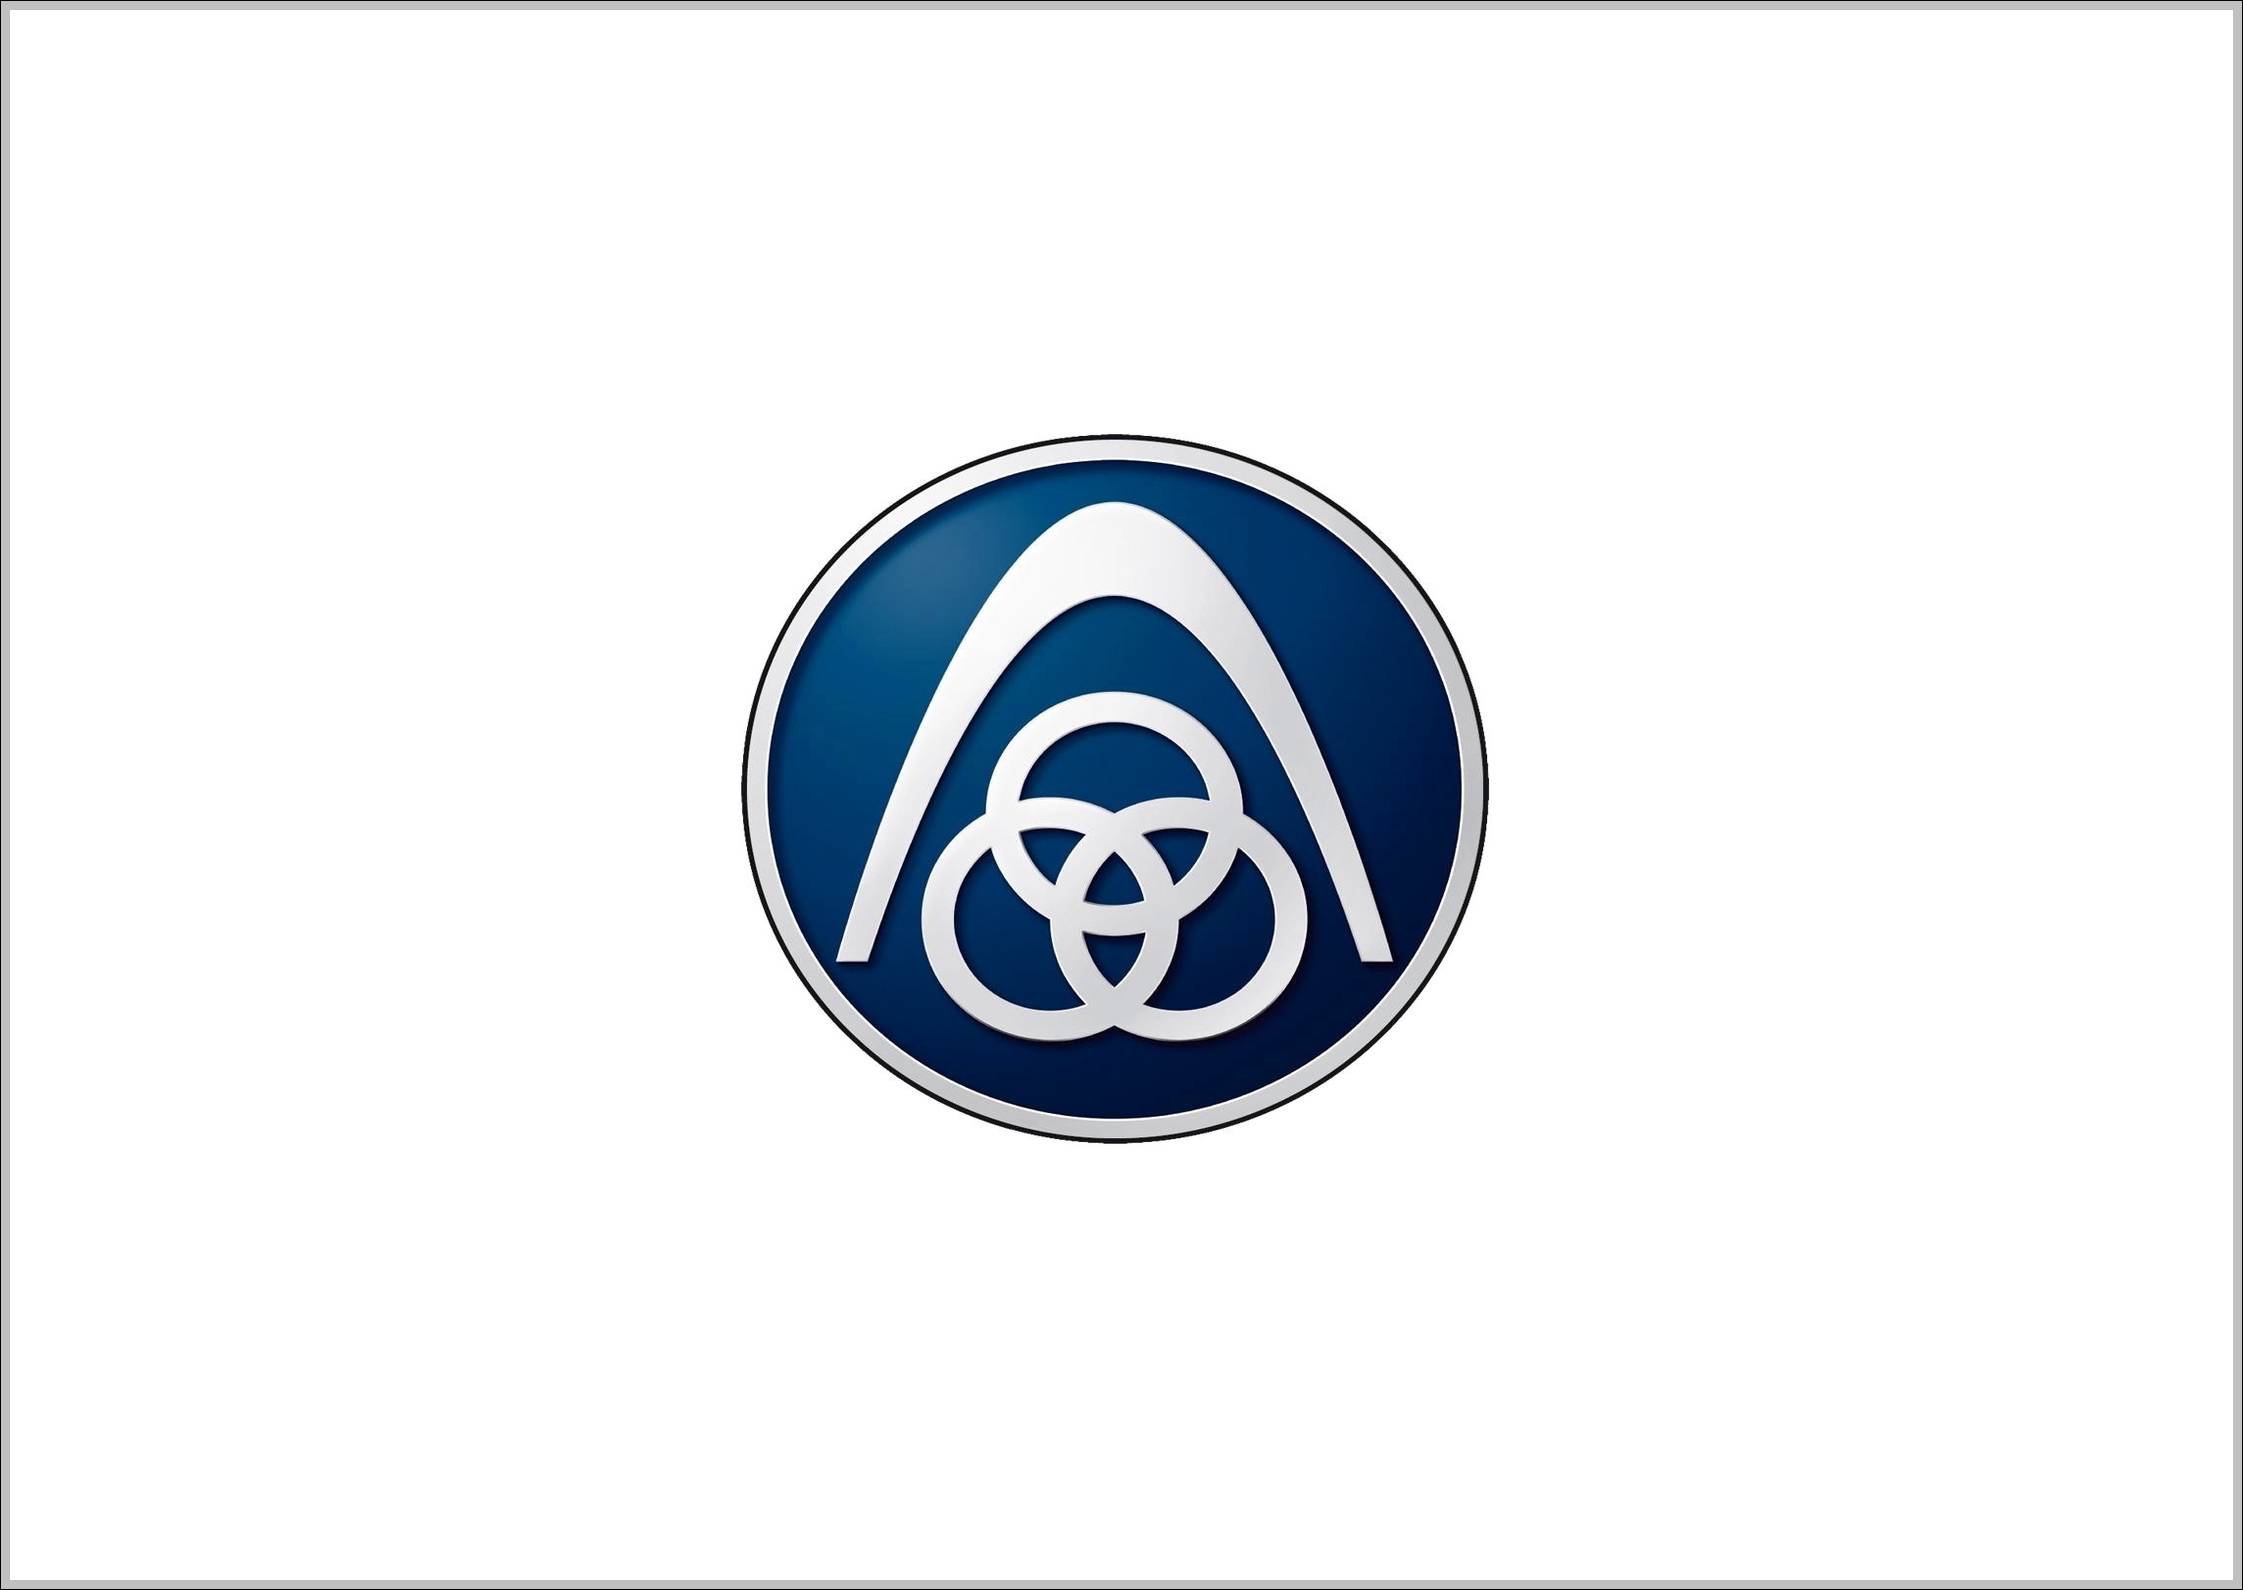 ThyssenKrupp Logo - ThyssenKrupp logo | Logo Sign - Logos, Signs, Symbols, Trademarks of ...